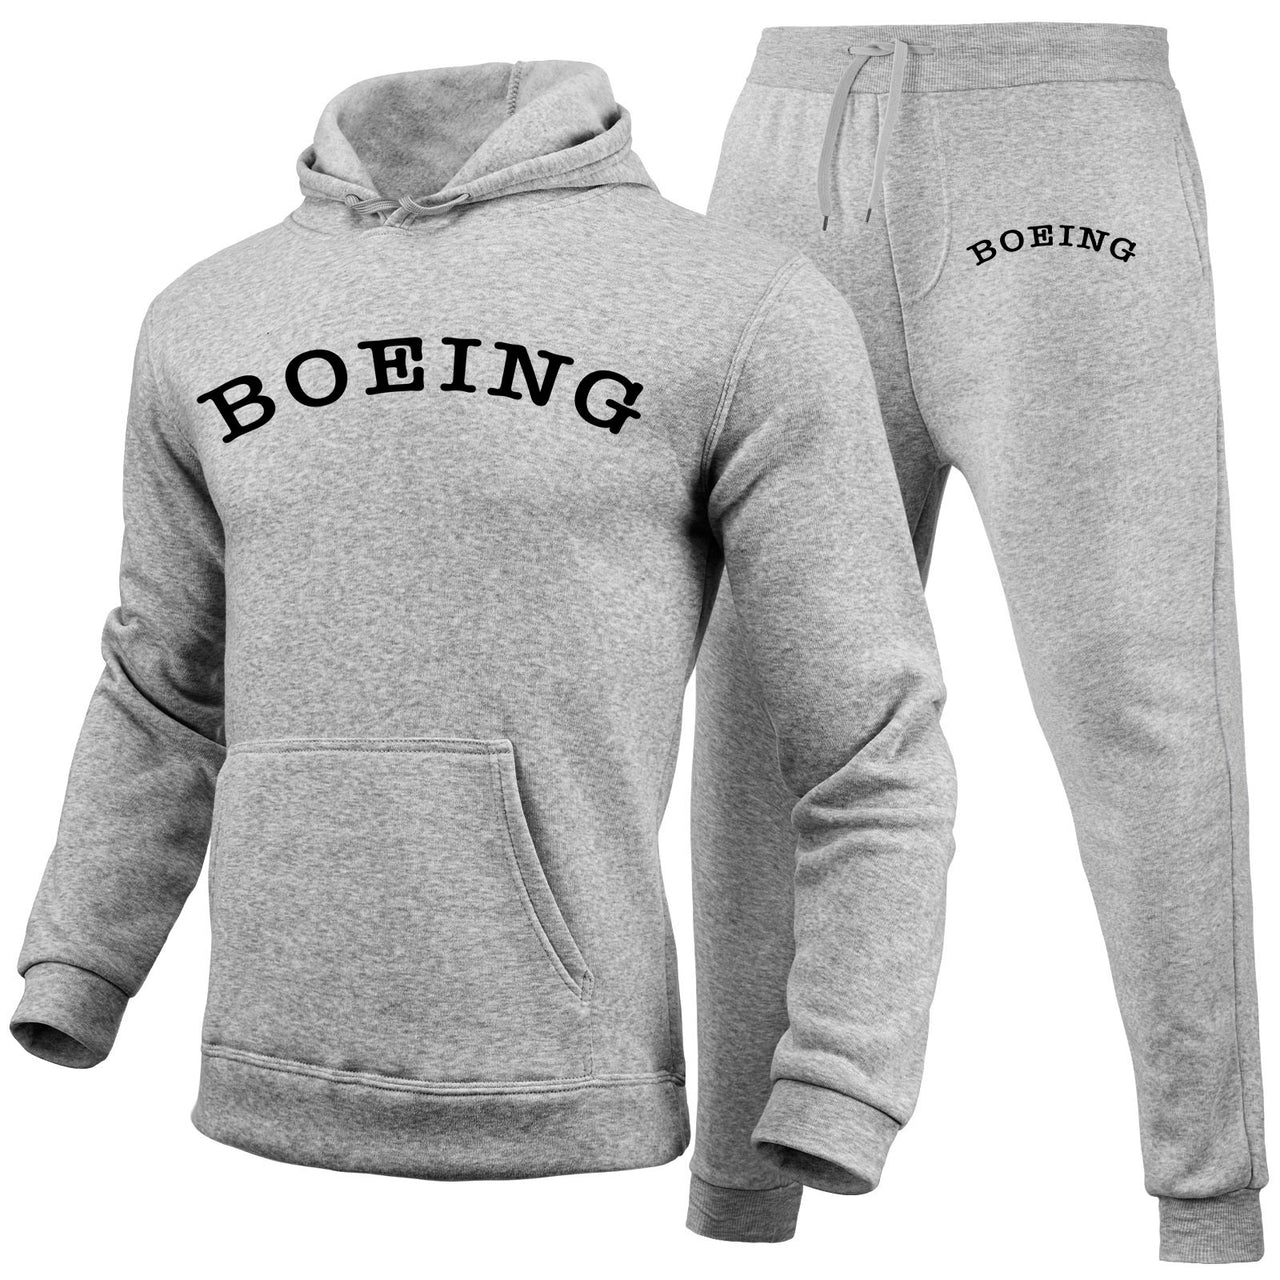 Special BOEING Text Designed Hoodies & Sweatpants Set